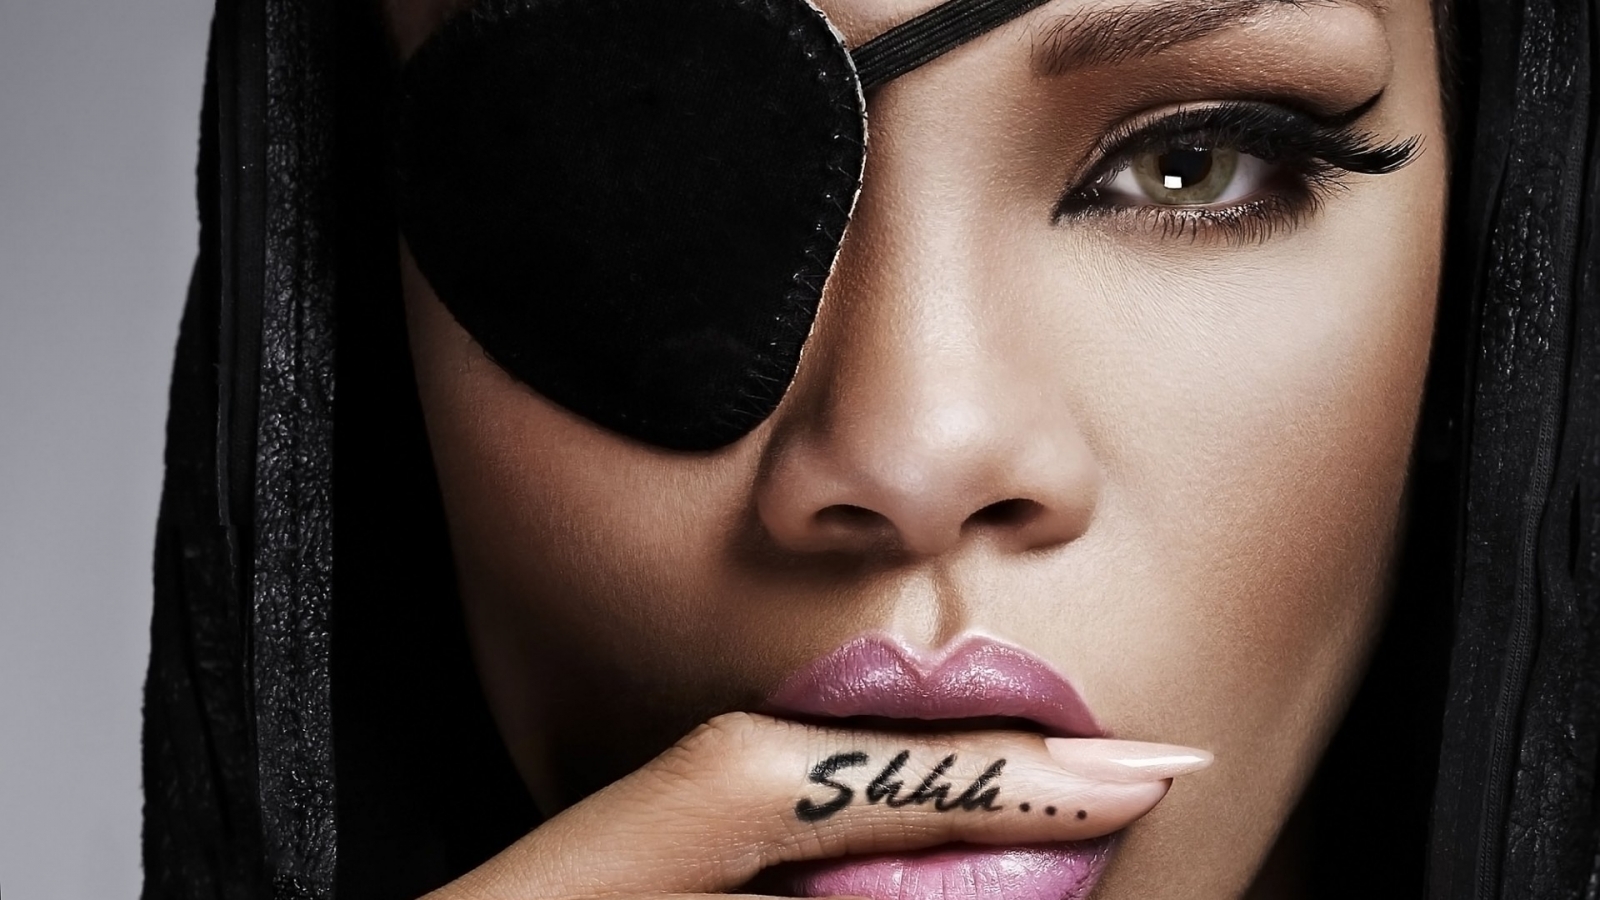 Rihanna Shhh Tattoo for 1600 x 900 HDTV resolution